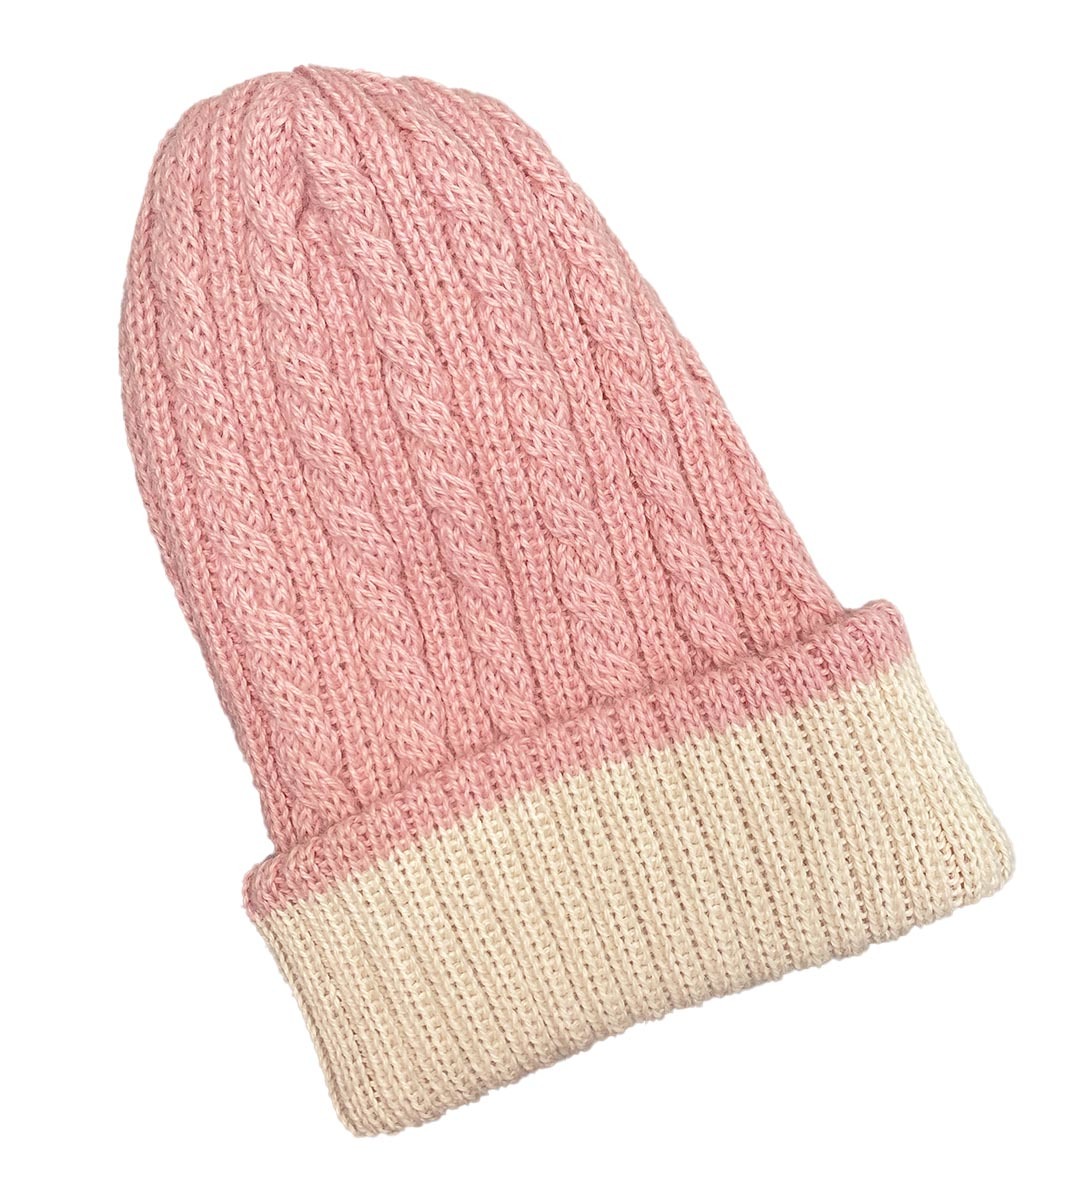 Reversible Hand Knit Alpaca Beanie - Pale Pink / White - 1